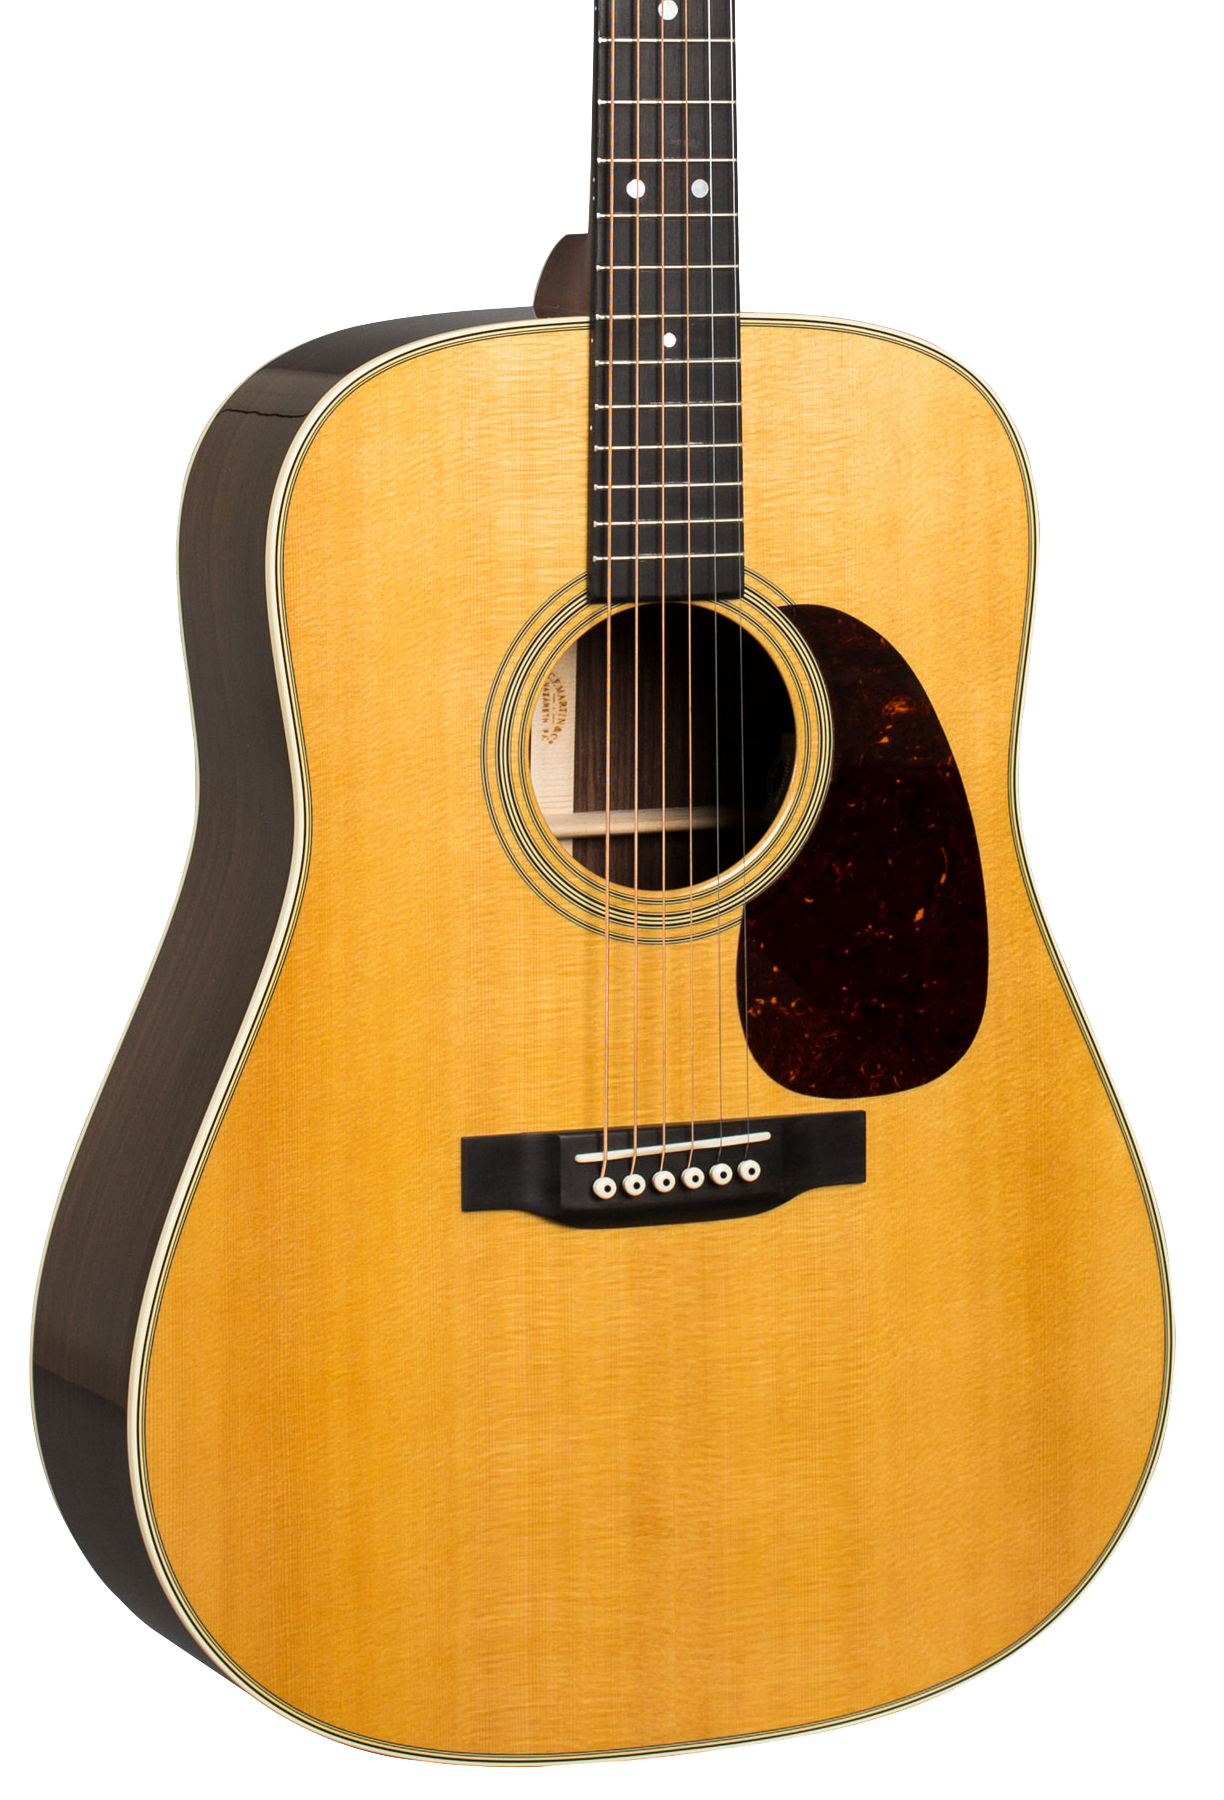 Martin D-28 Acoustic Guitar body Tone Shop Guitars Dallas Fort Worth Texas